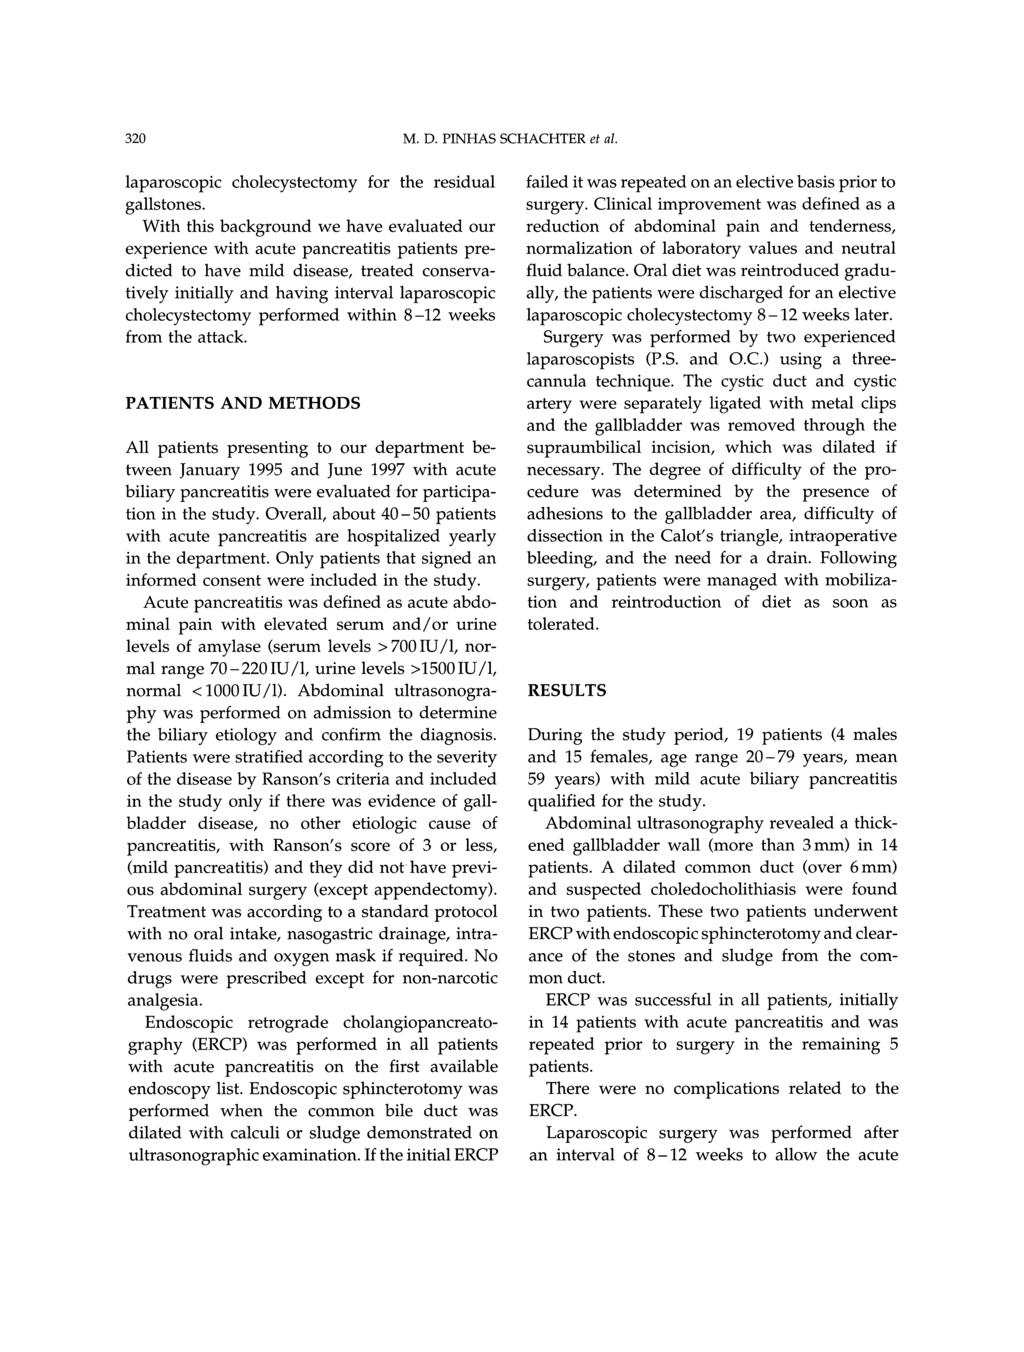 320 M.D. PINHAS SCHACHTER et al. laparoscopic cholecystectomy for the residual gallstones.